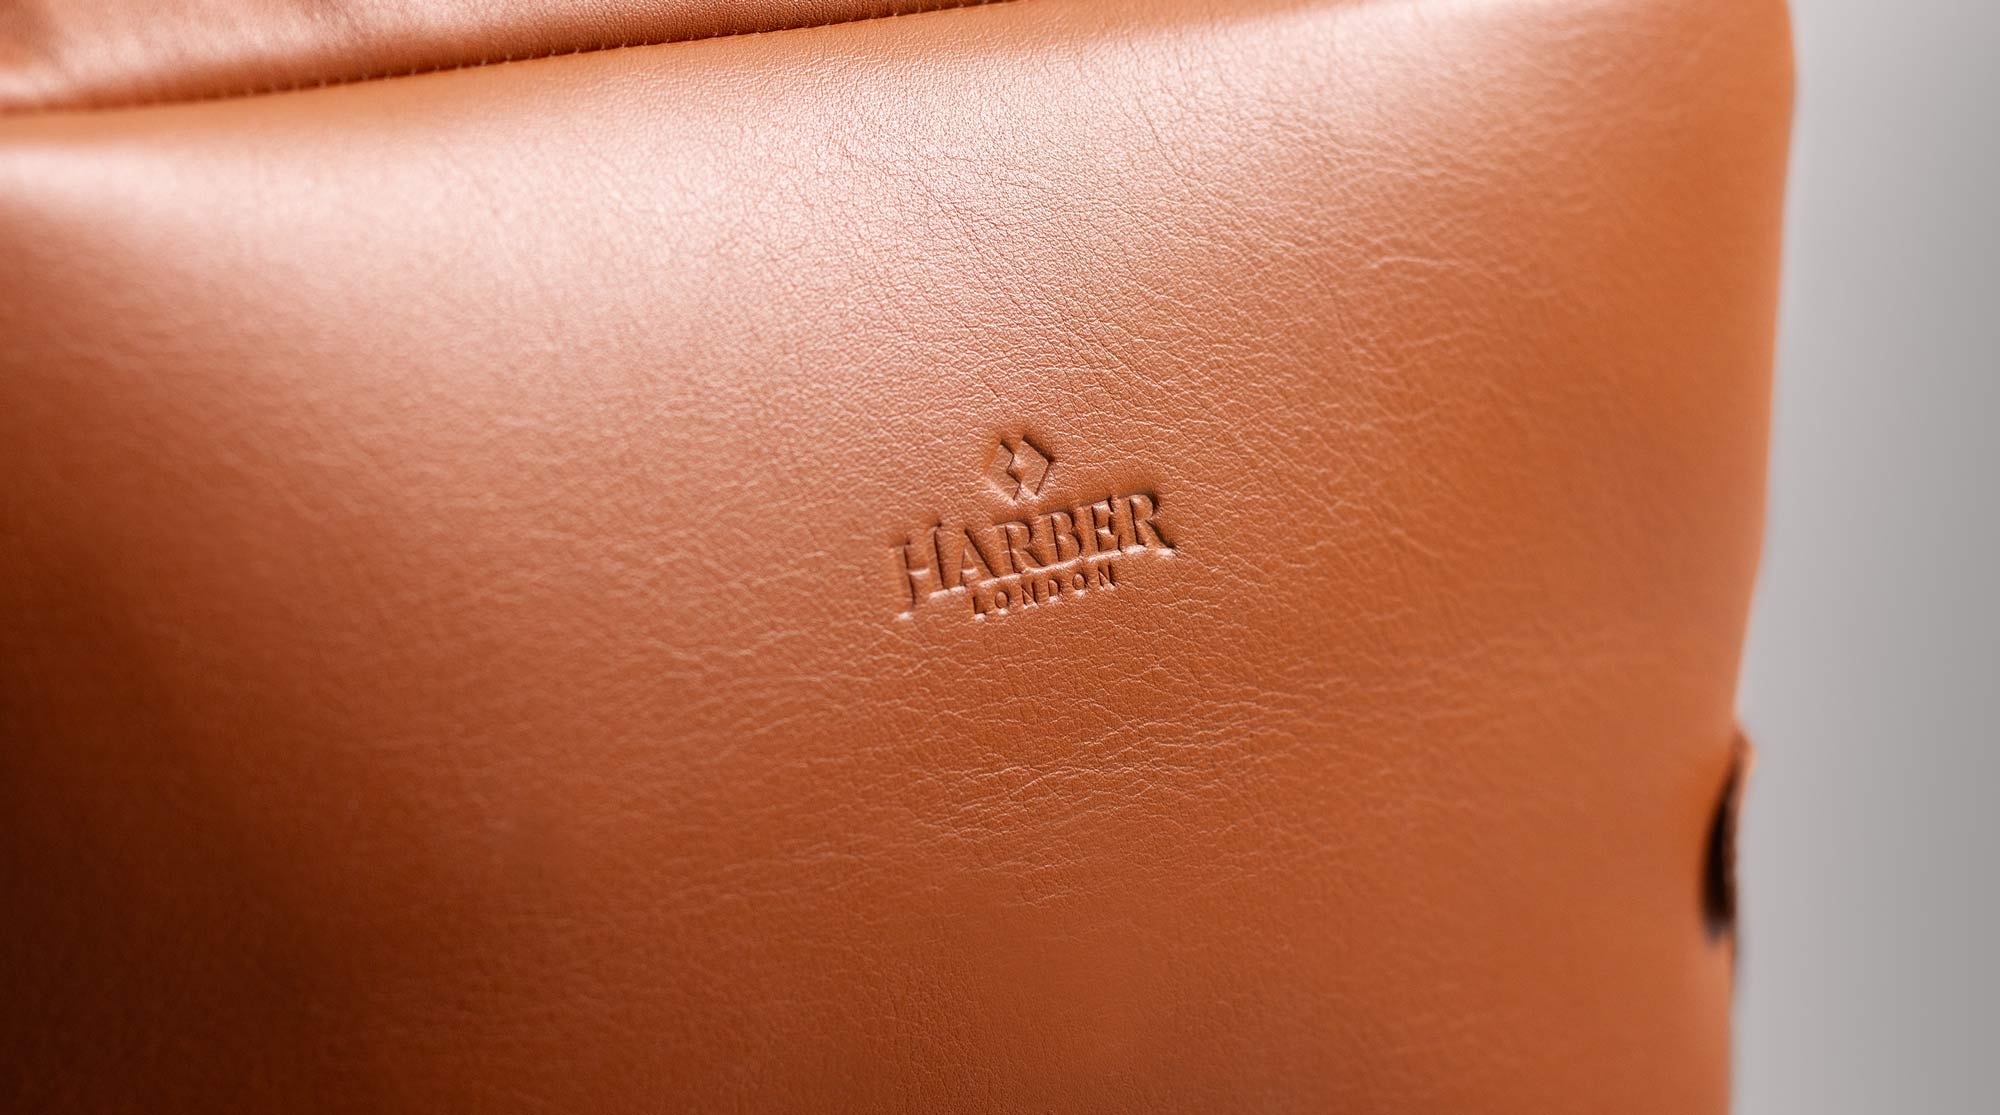 Slim laptop leather premium backpack Harber London logo debossed 